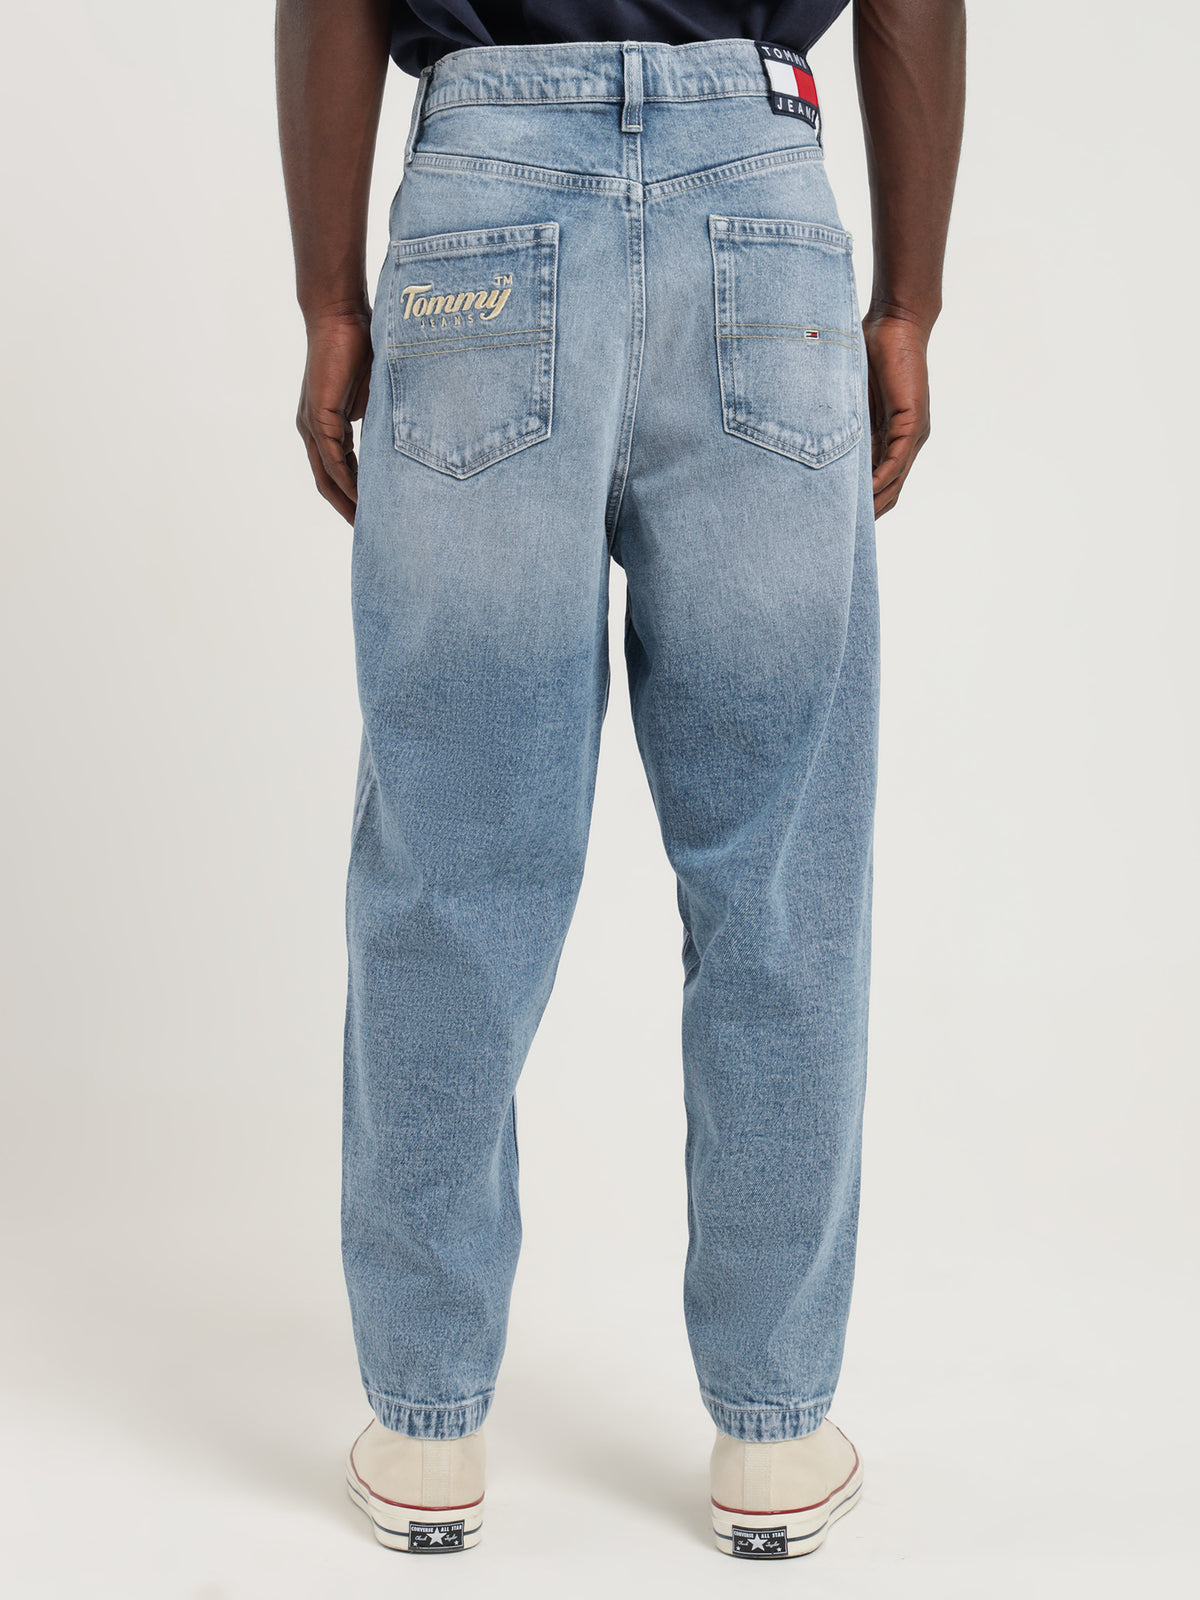 Bax Tapered Jeans in Denim